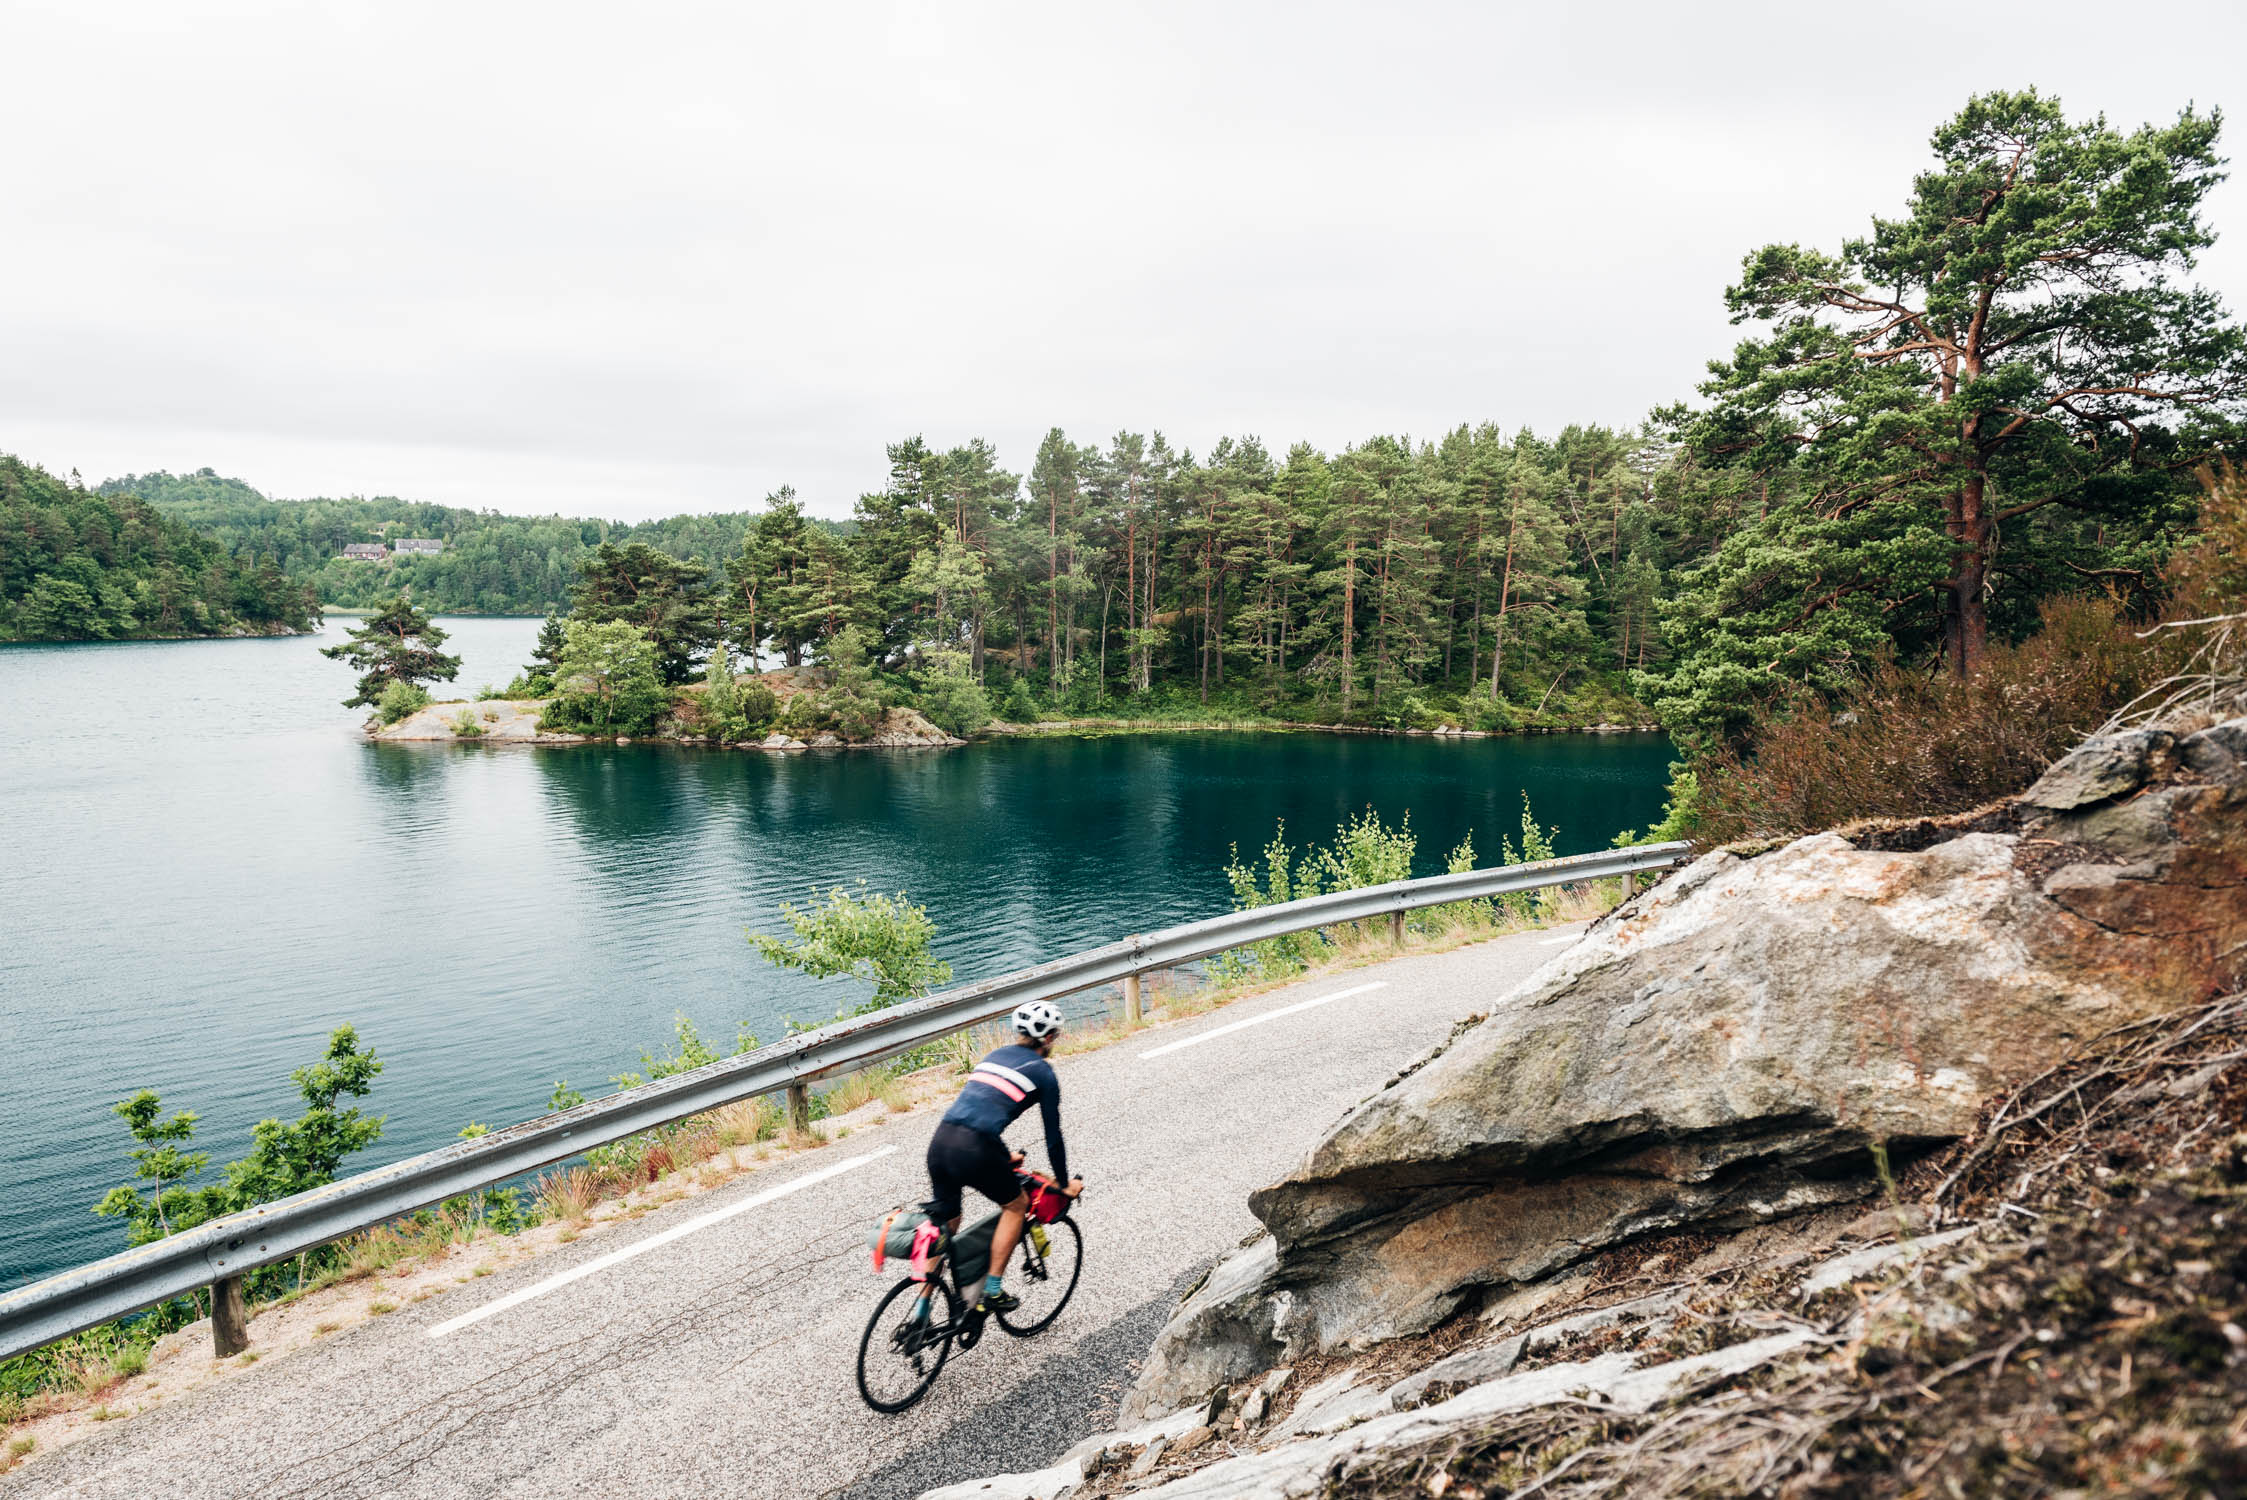 gustav-thuesen-photographer-bikepacking-norway-scandinavia-fine-art-3.jpg